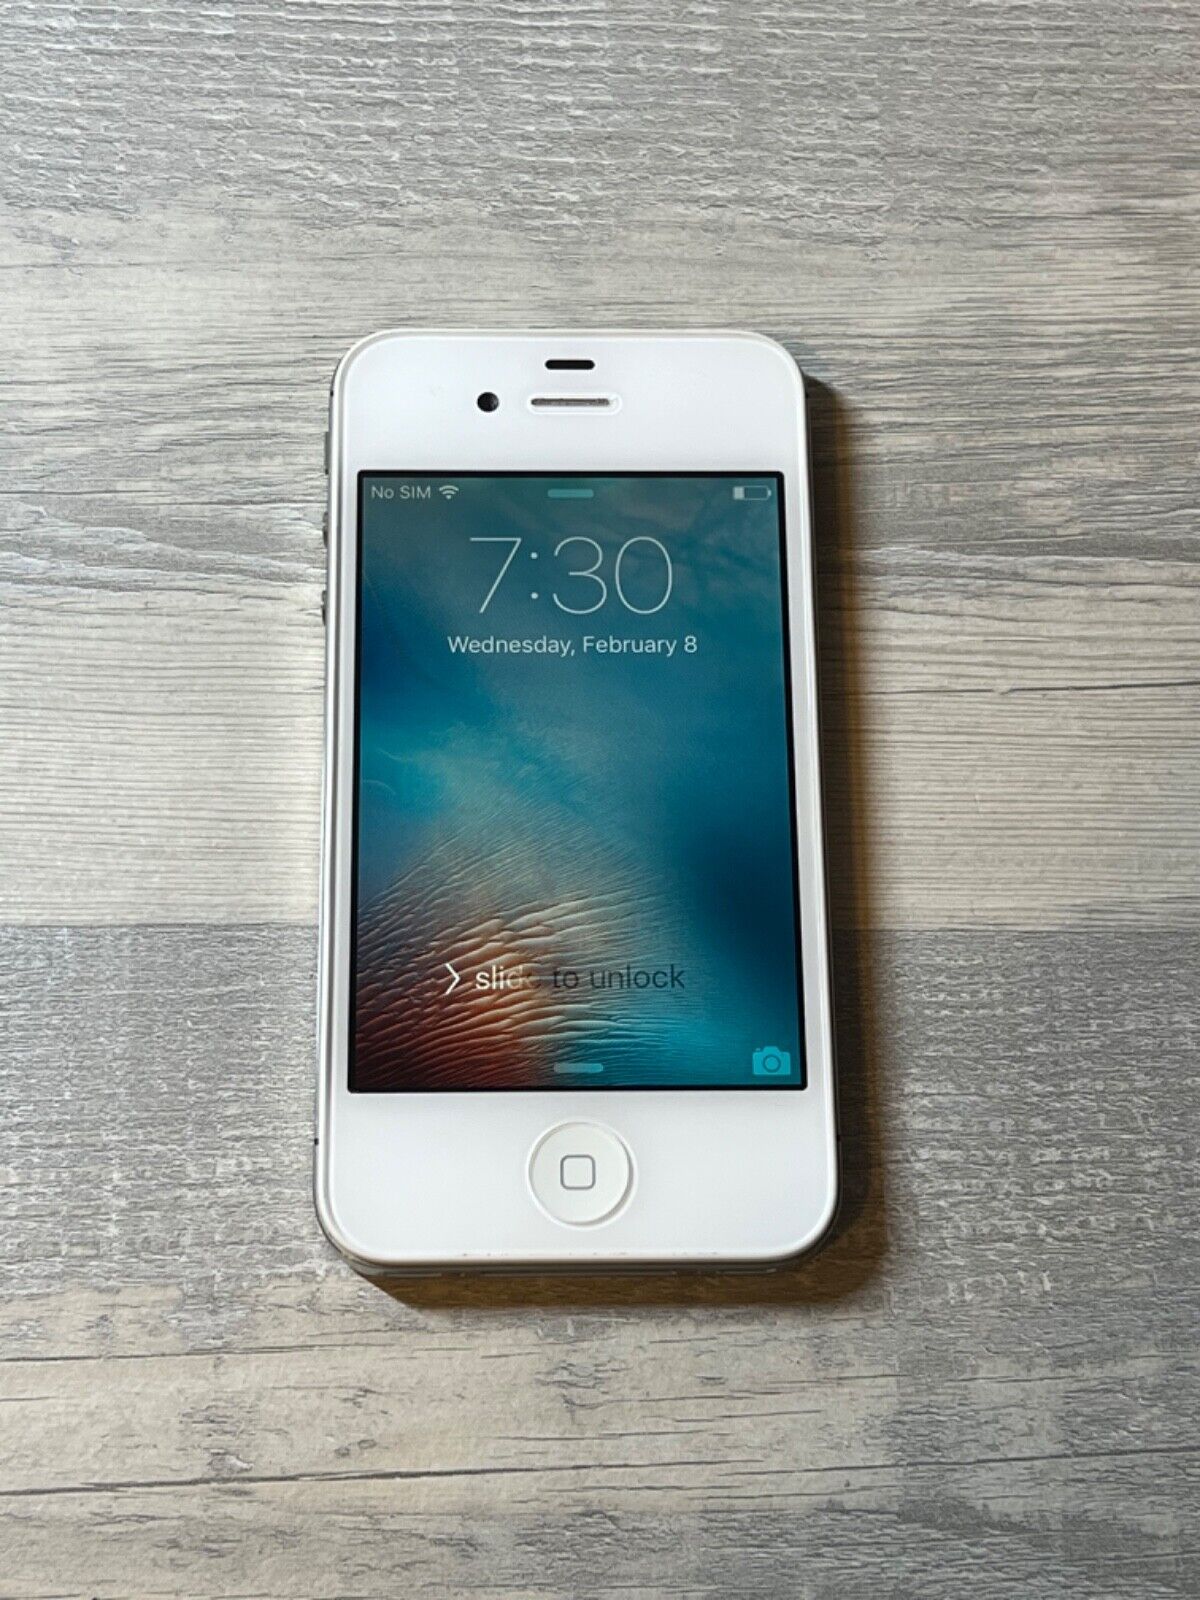 Apple iPhone 4s Unlocked Smartphone 16GB - Black & White